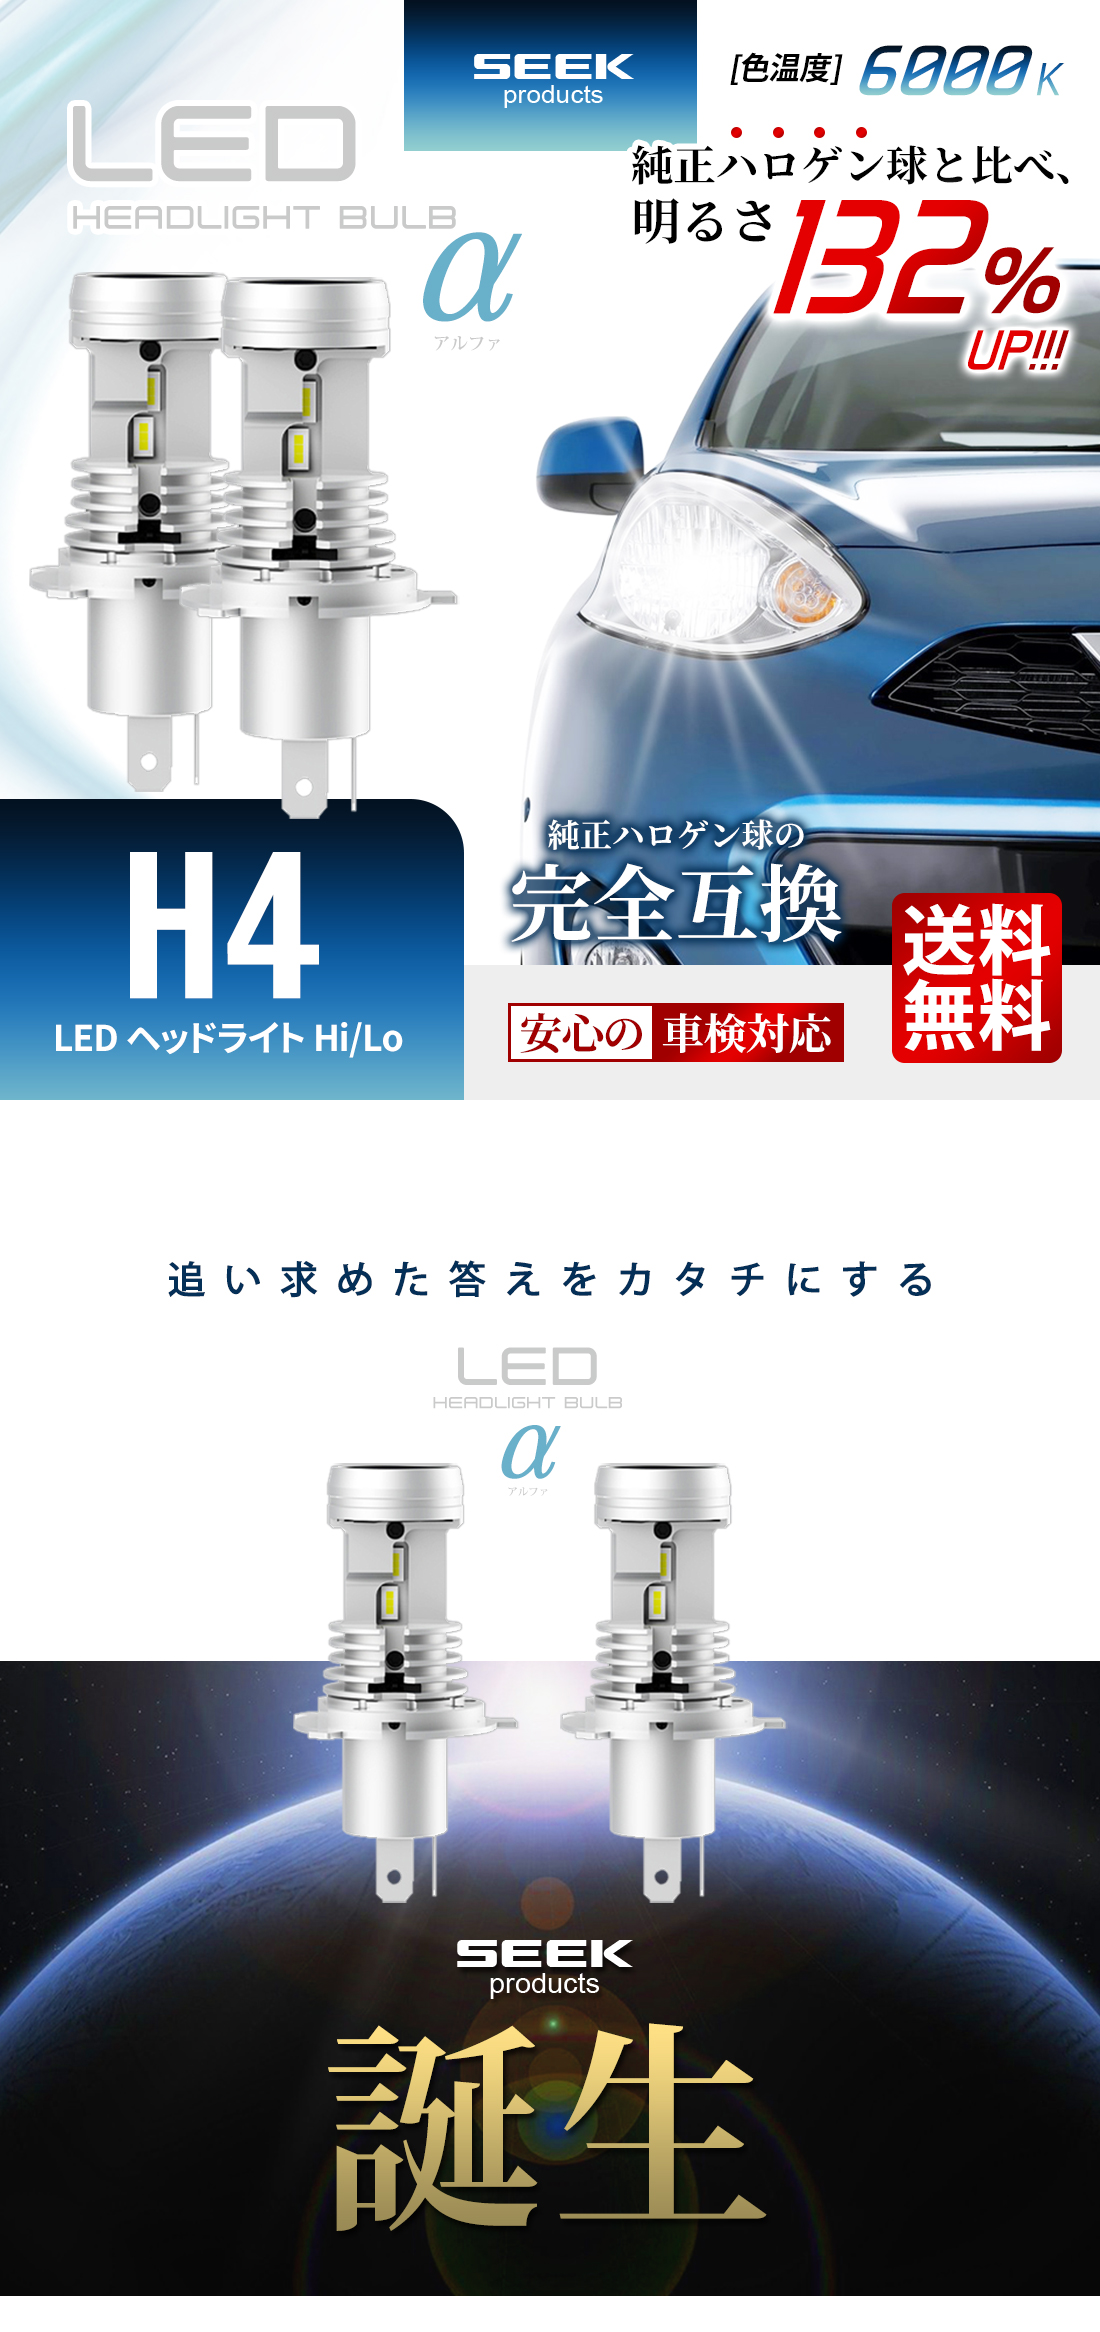 LEDヘッドライト H4 Hi/Lo 切替 ポン付 冷却ファン内蔵 車 電球 LEDバルブ CSP7035チップ搭載 6000K 車検対応  純正ハロゲン完全互換 アルファ 送料無料 :SOSALPHA-H4:シークオンラインショッピング 通販 